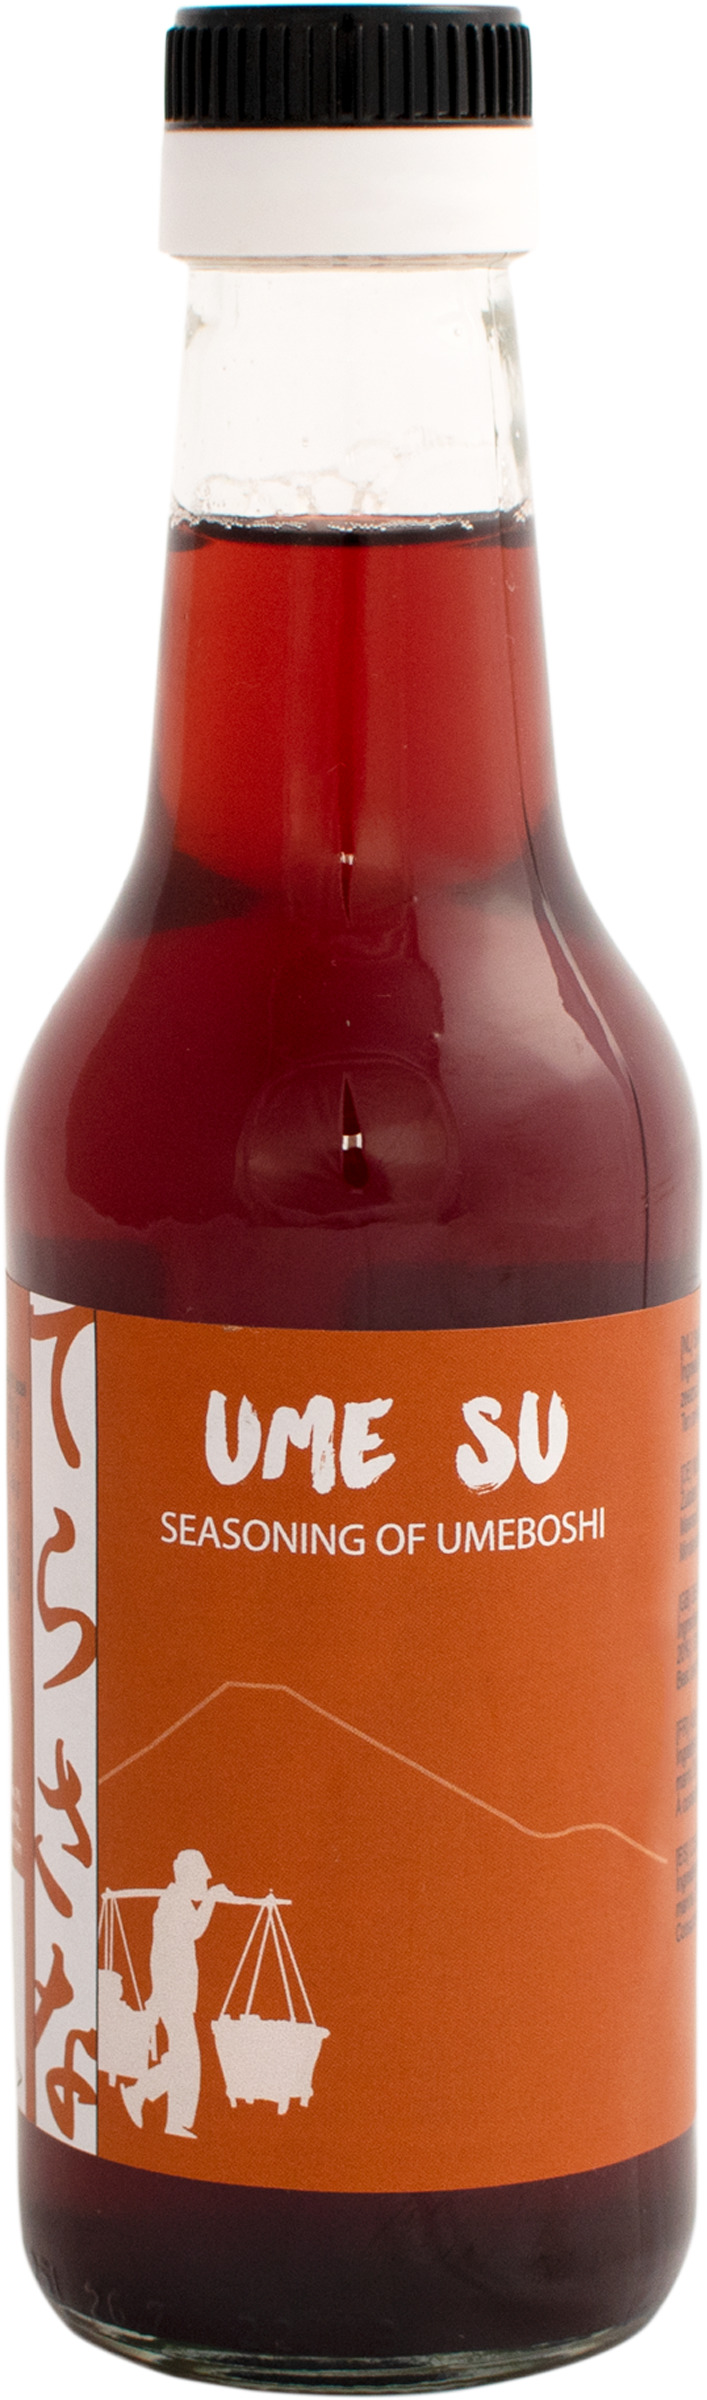 Ume Su (Essig aus Umeboshi)